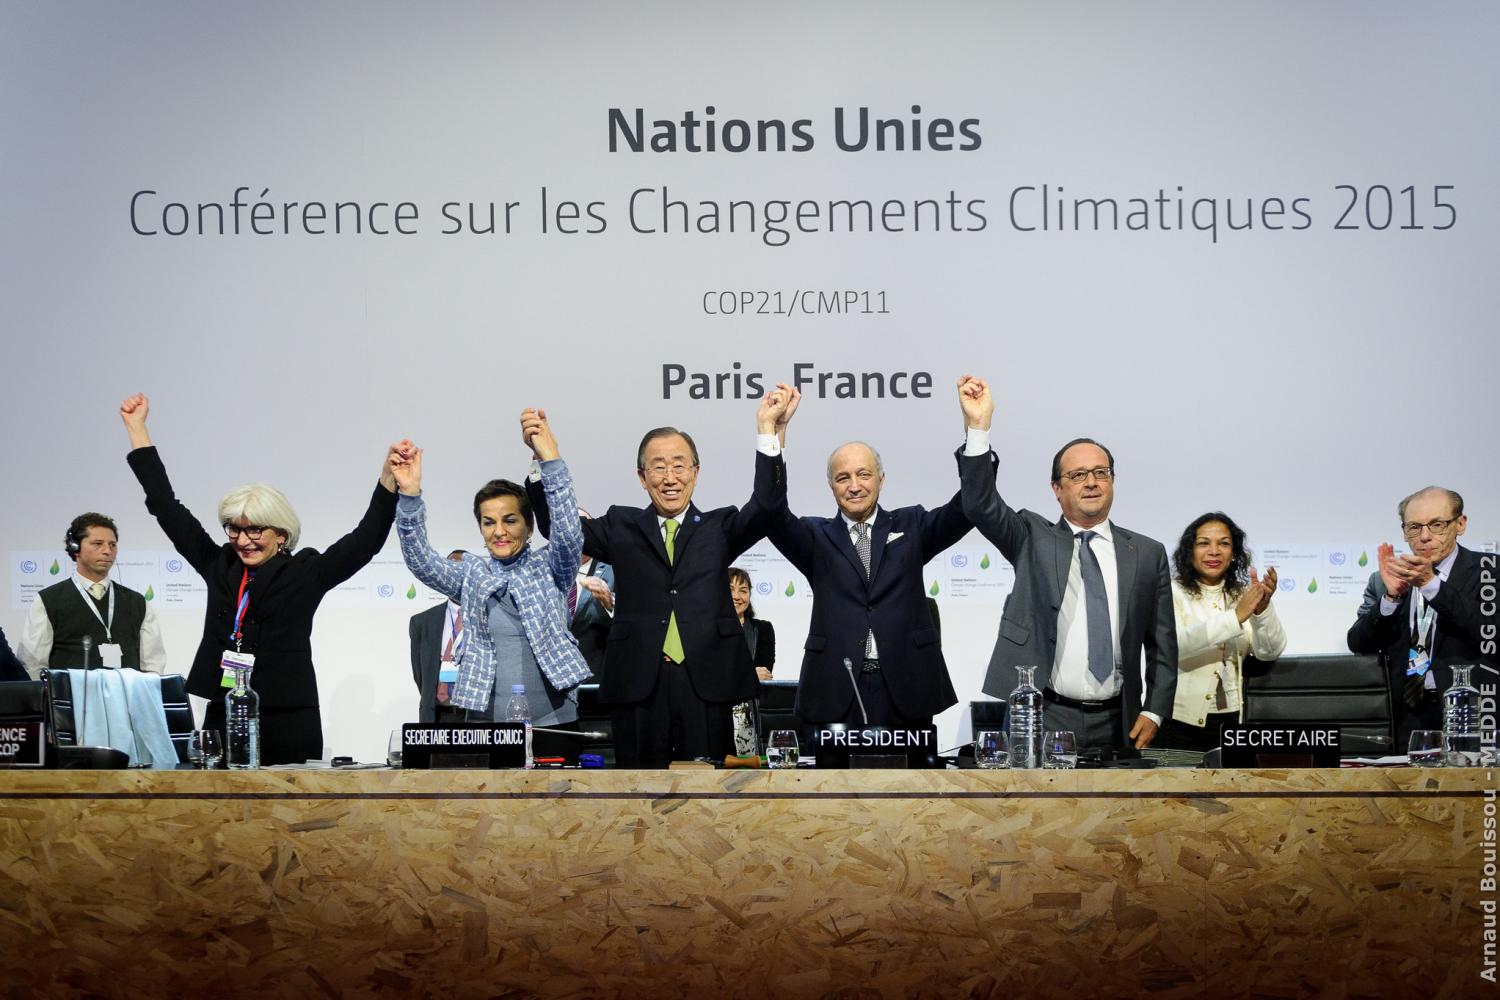 COP21 Paris agreement adopted